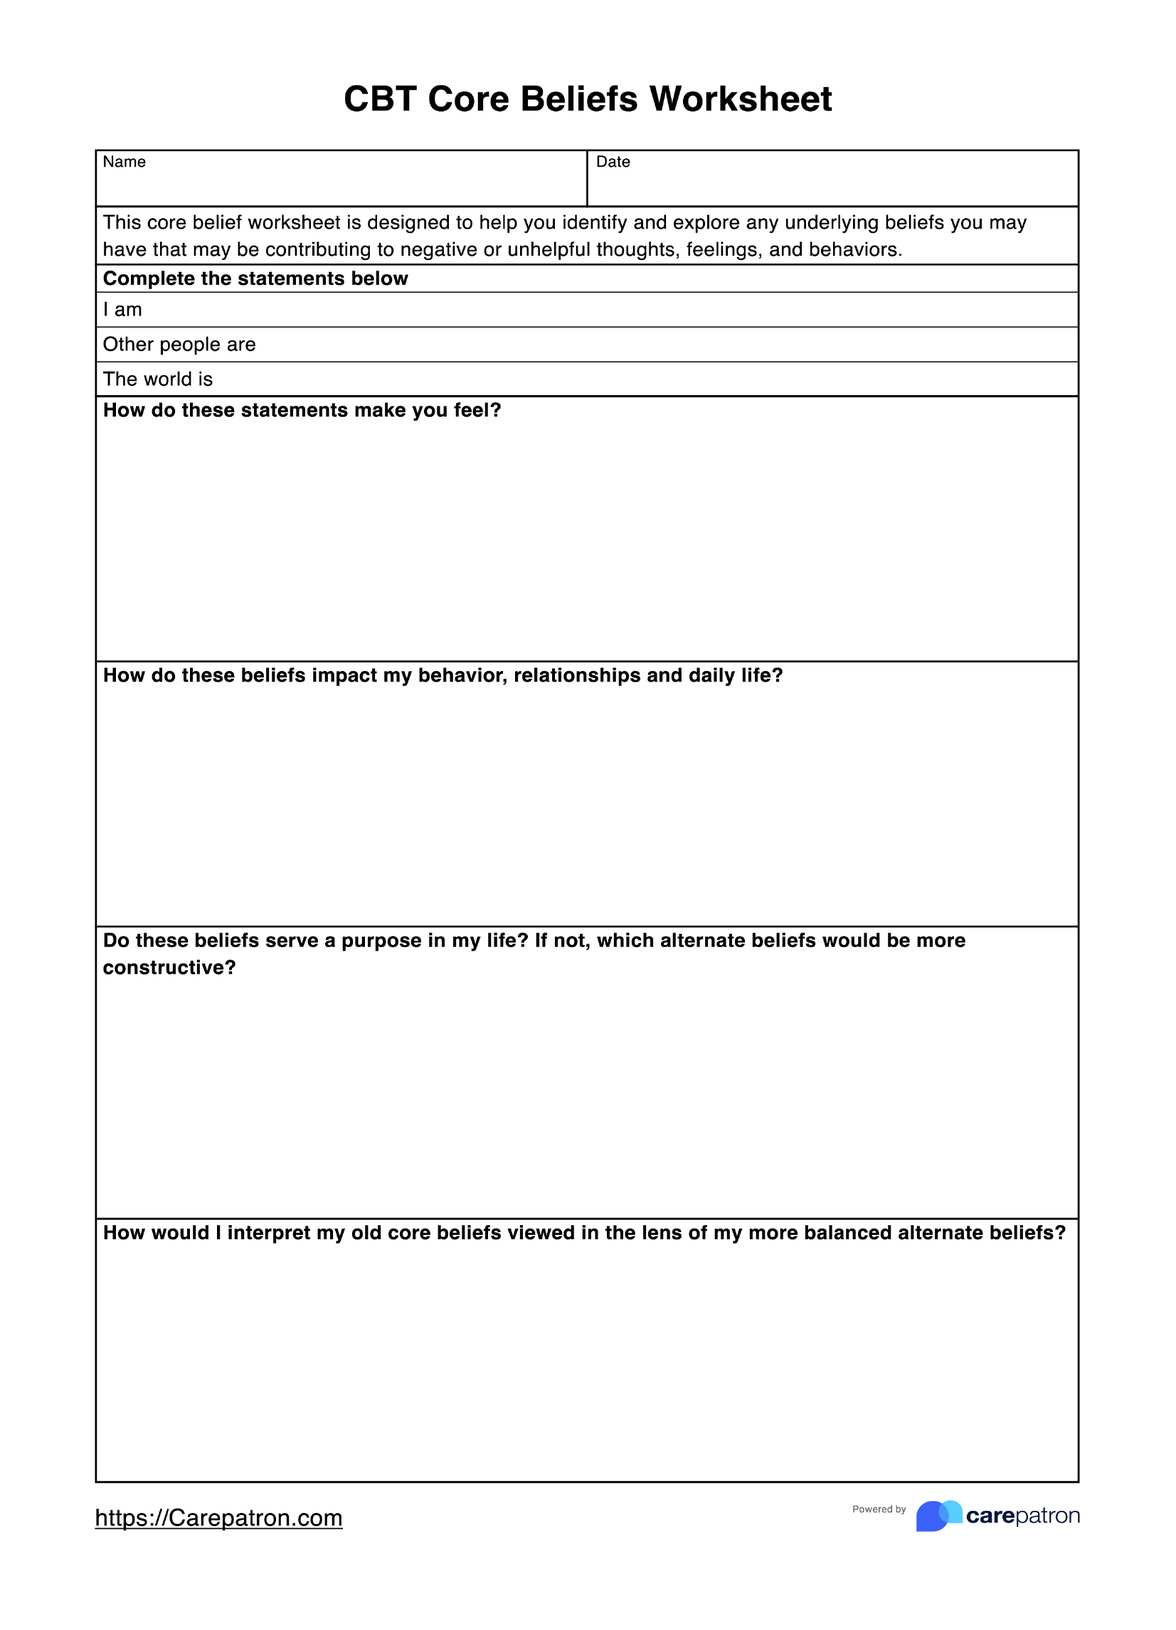 CBT Core Beliefs Worksheet PDF Example